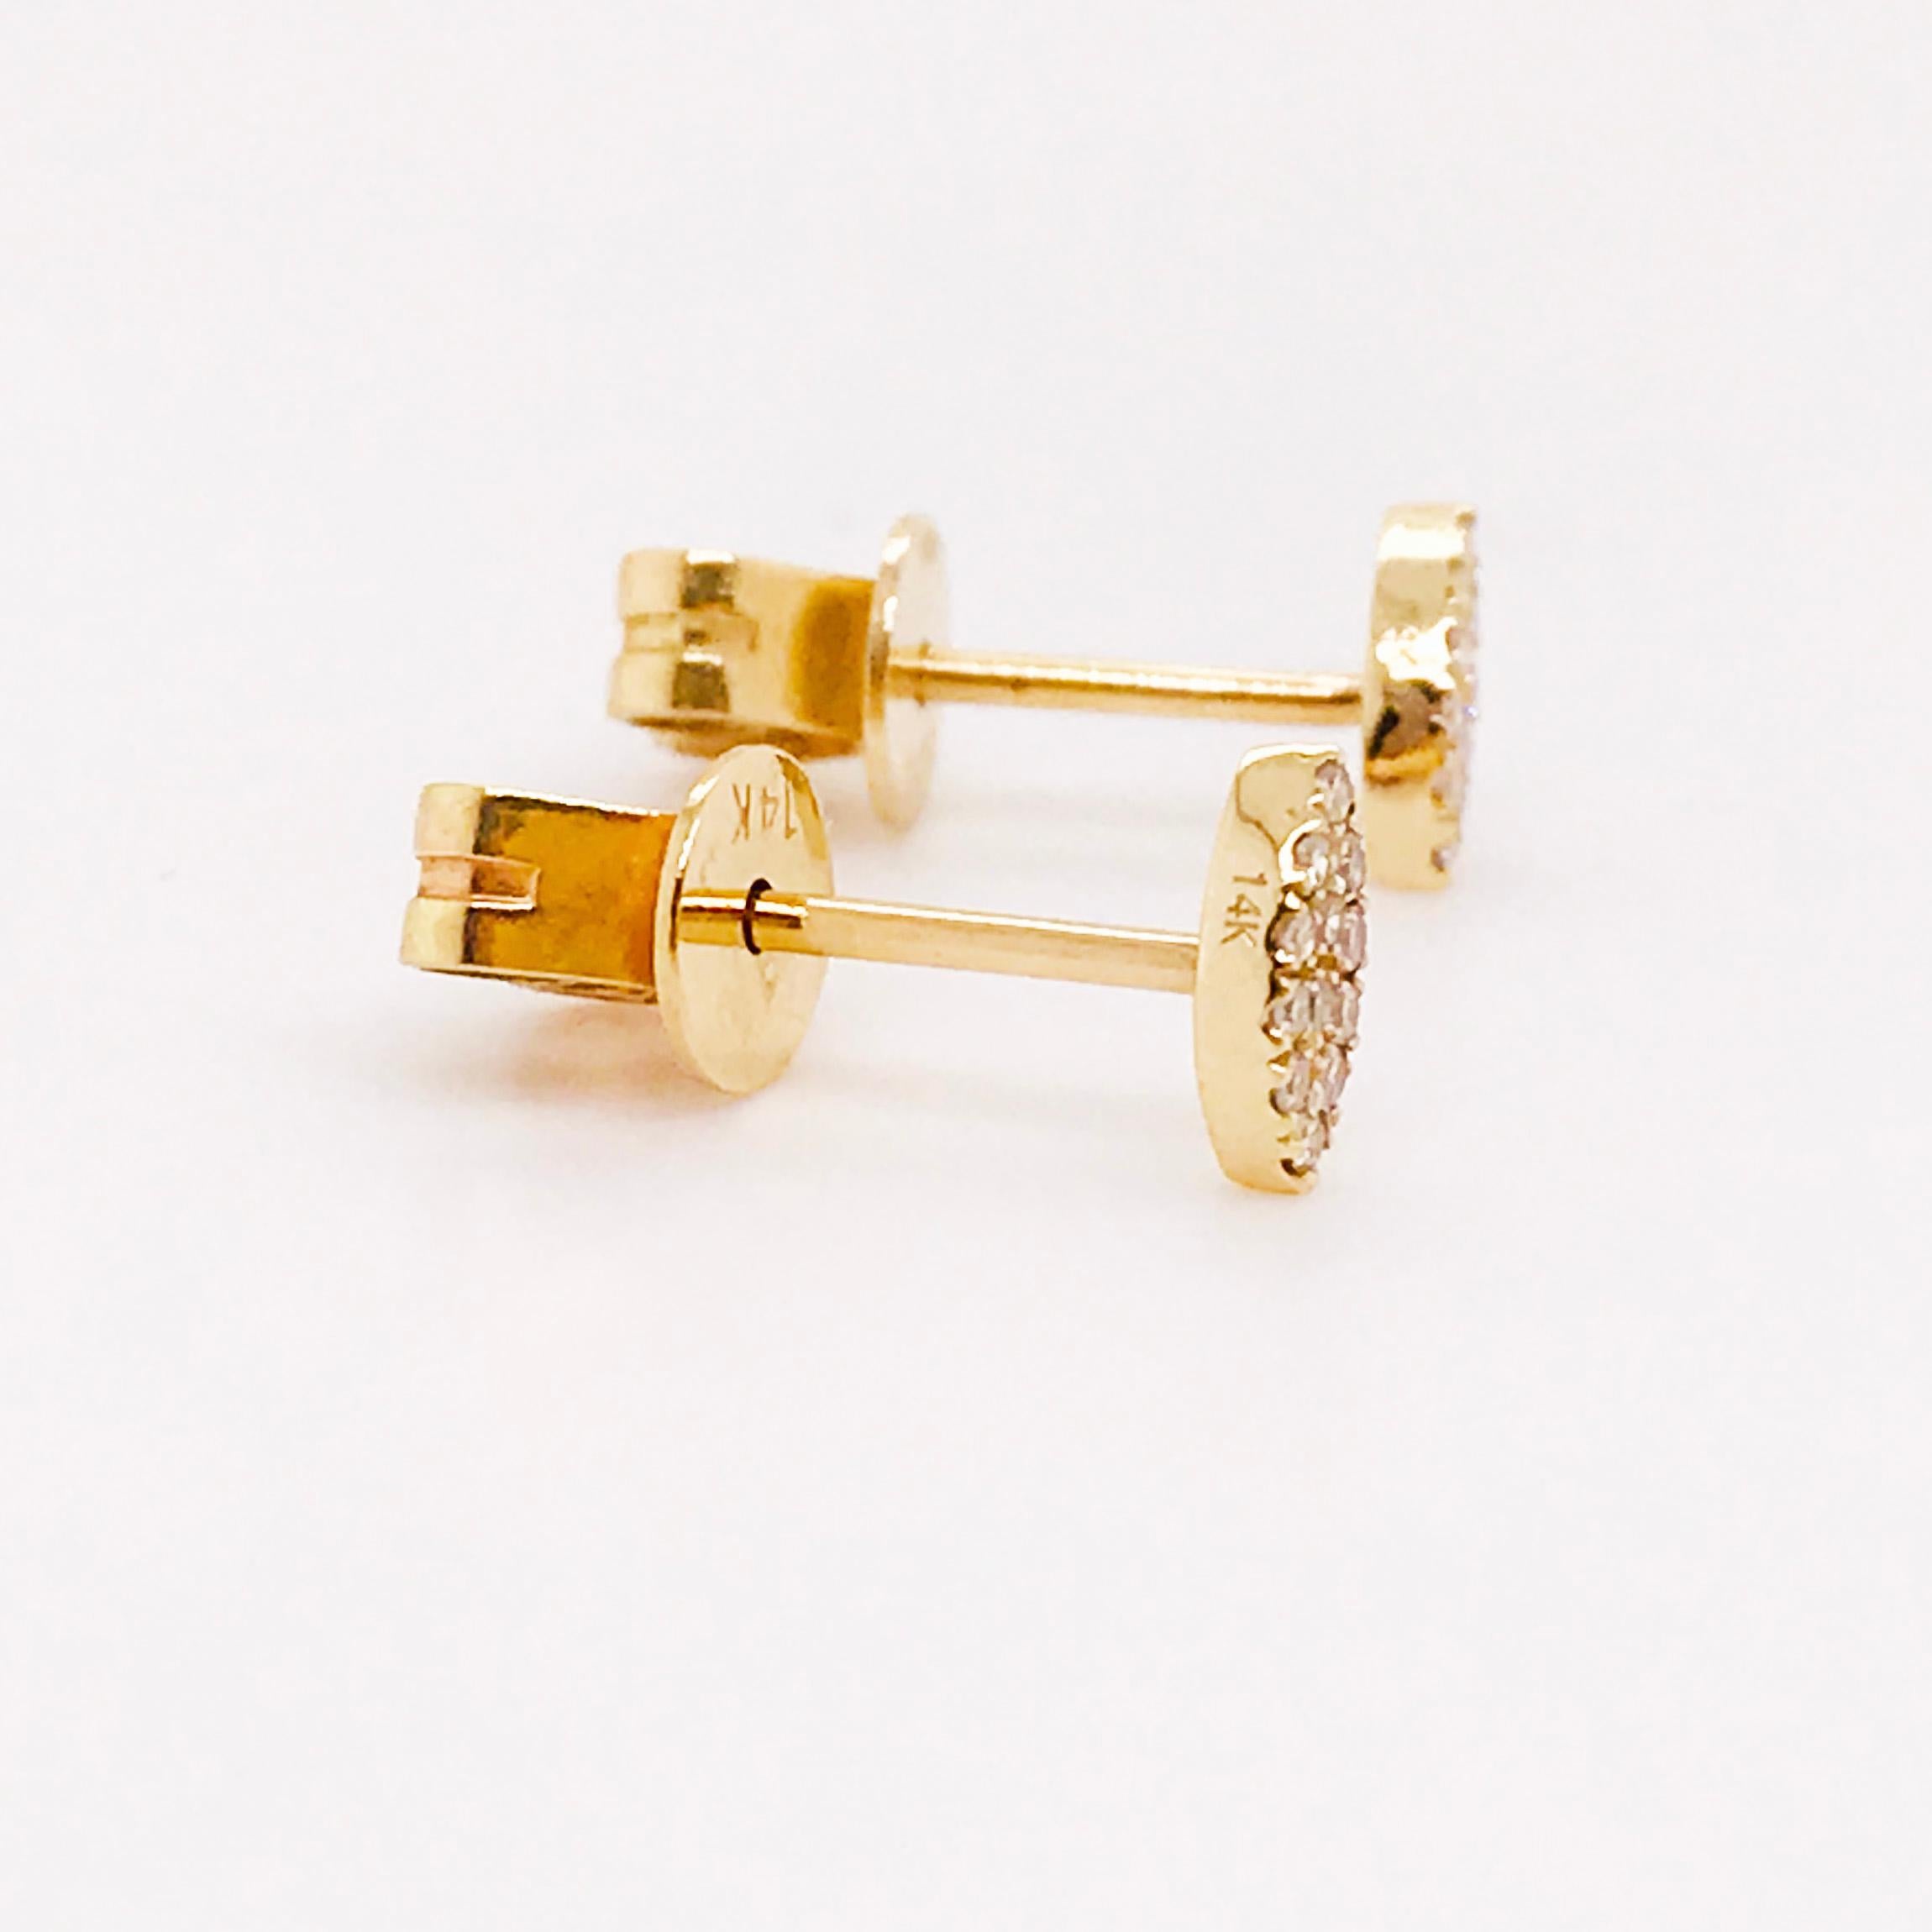 Modern 0.06 Carat Diamond Marquise Shaped Earring Studs in 14 Karat Yellow Gold